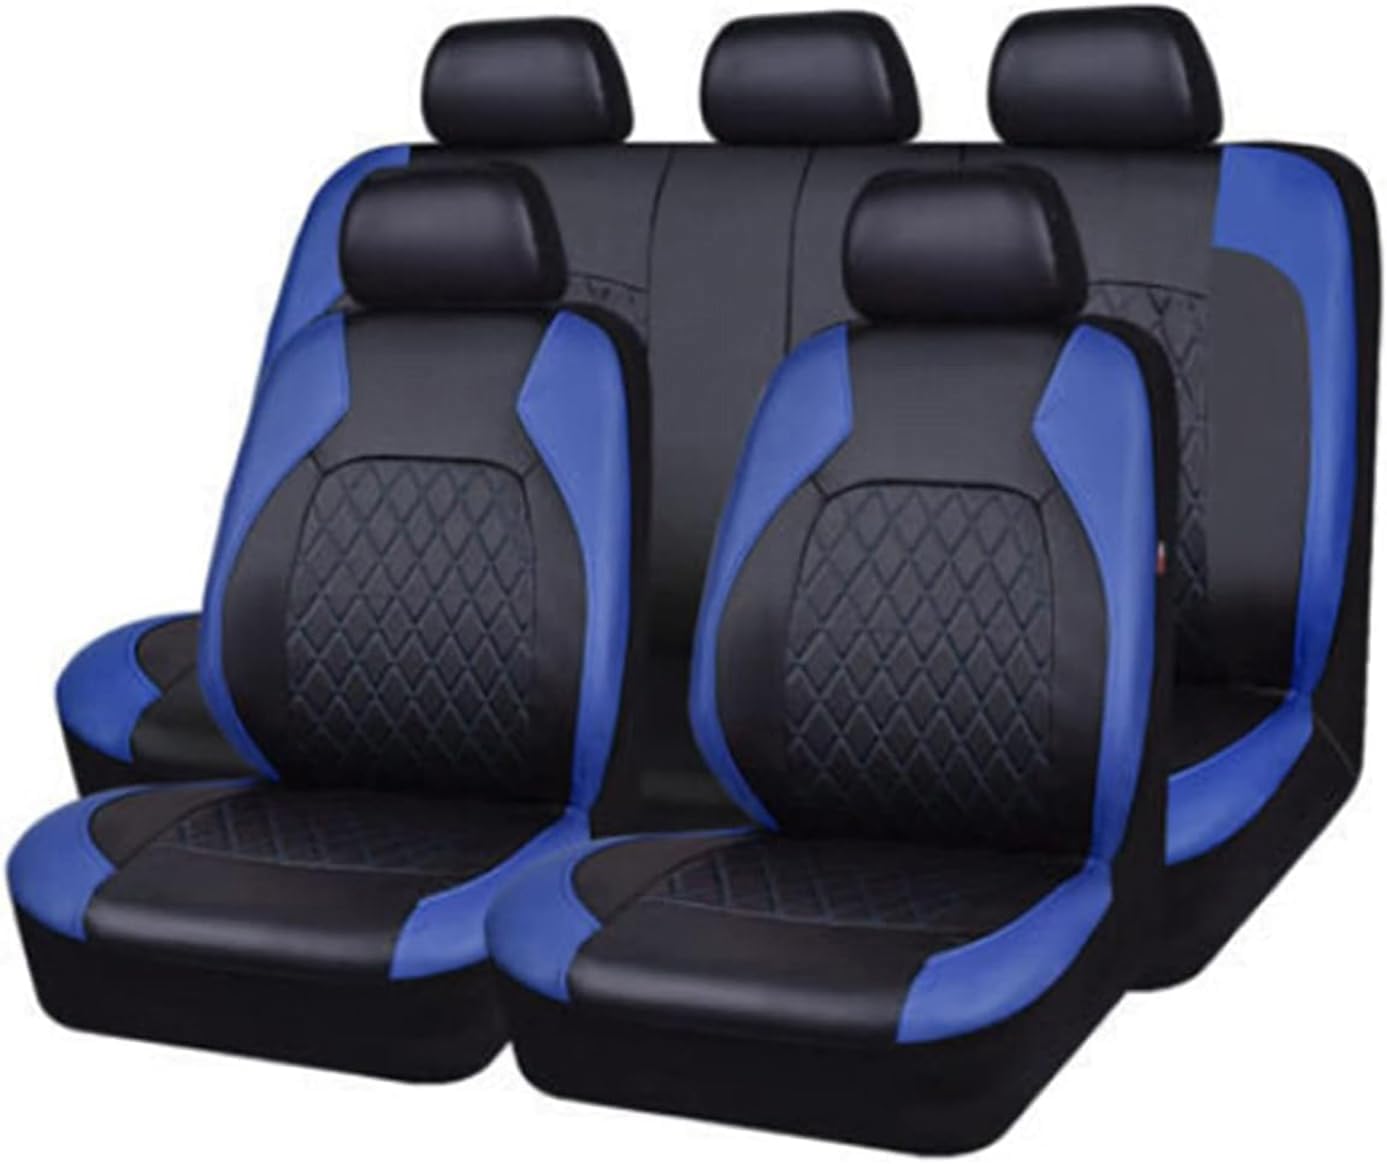 Auto Leder Sitzbezüge für Audi A6 C5 4B Avant A6 C6 4F Avant A6 C6 4F, 9 Stück Allwetter rutschfest Wasserdicht Atmungsaktiv Schonbezug Set Sitzkissenschutz,C/Blue von SARCX